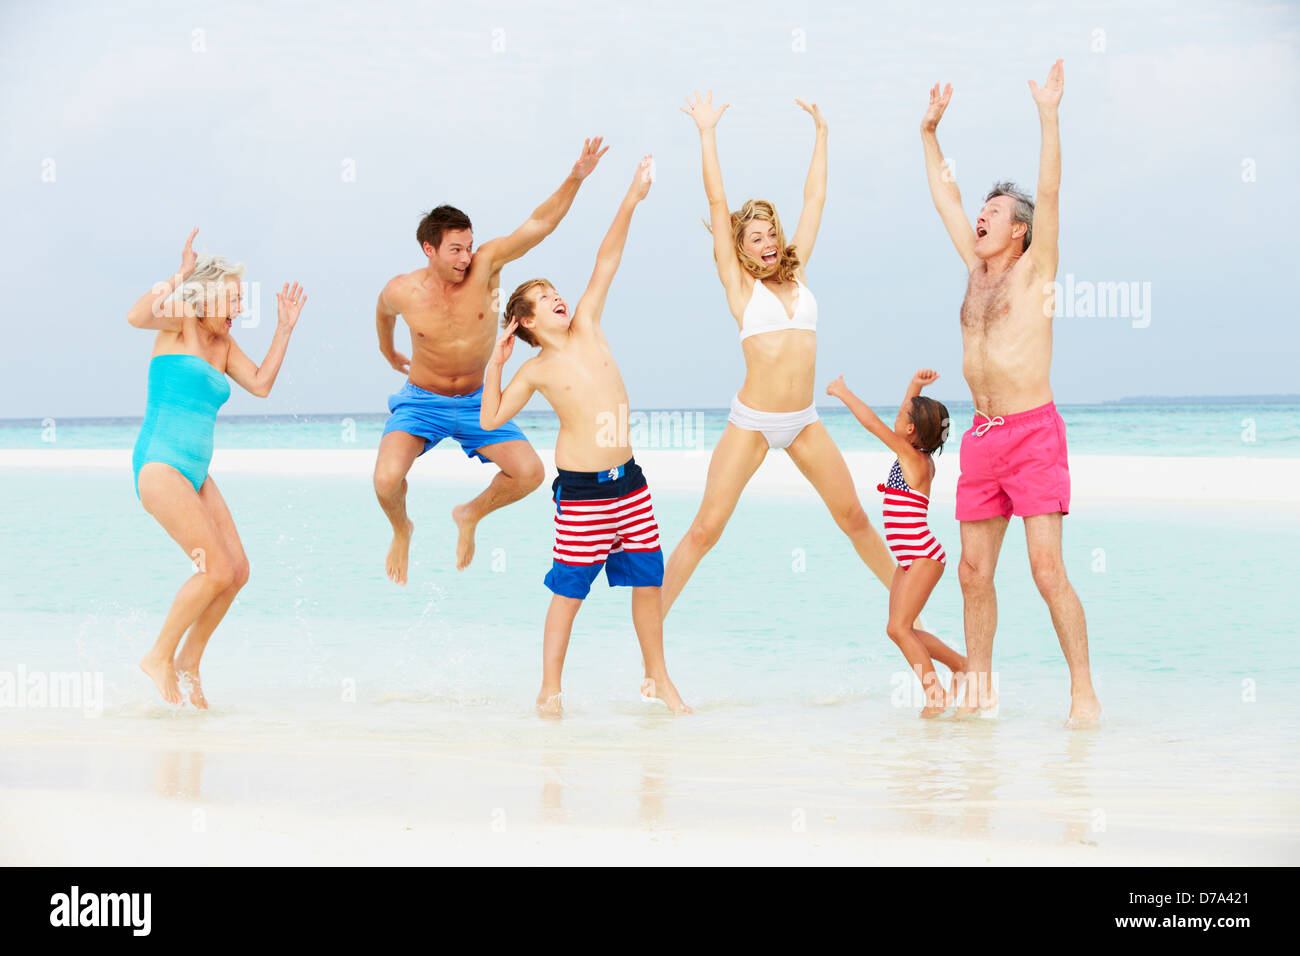 Multi Generation Family Having Fun In Sea On Beach Holiday Stock Photo